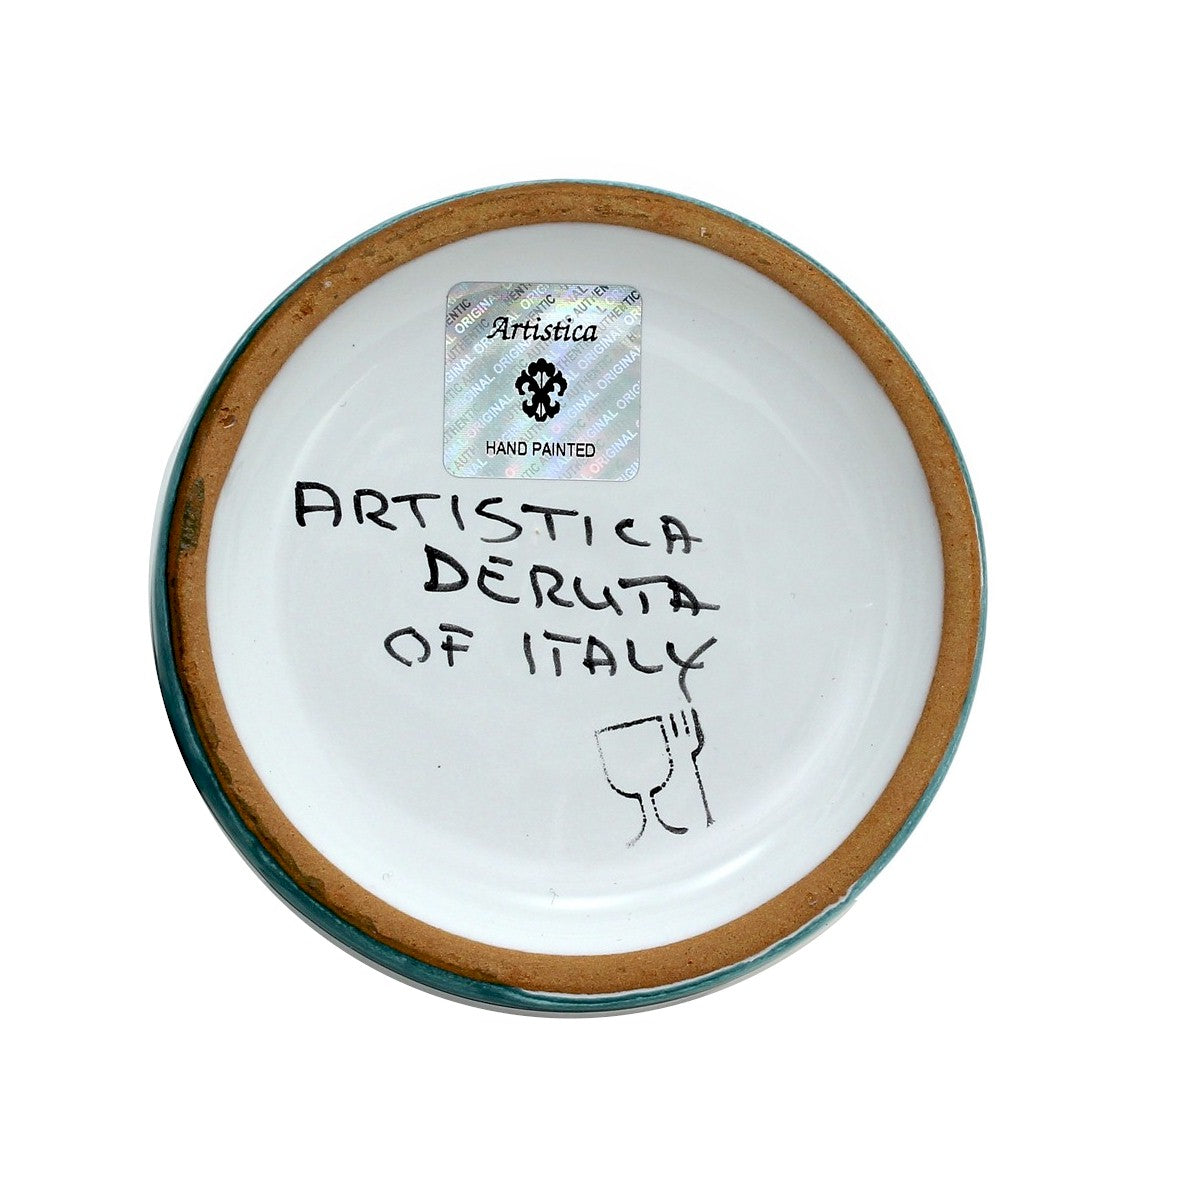 GIFT BOX: With authentic Deruta hand painted ceramic - Pitcher Ricco Deruta Design